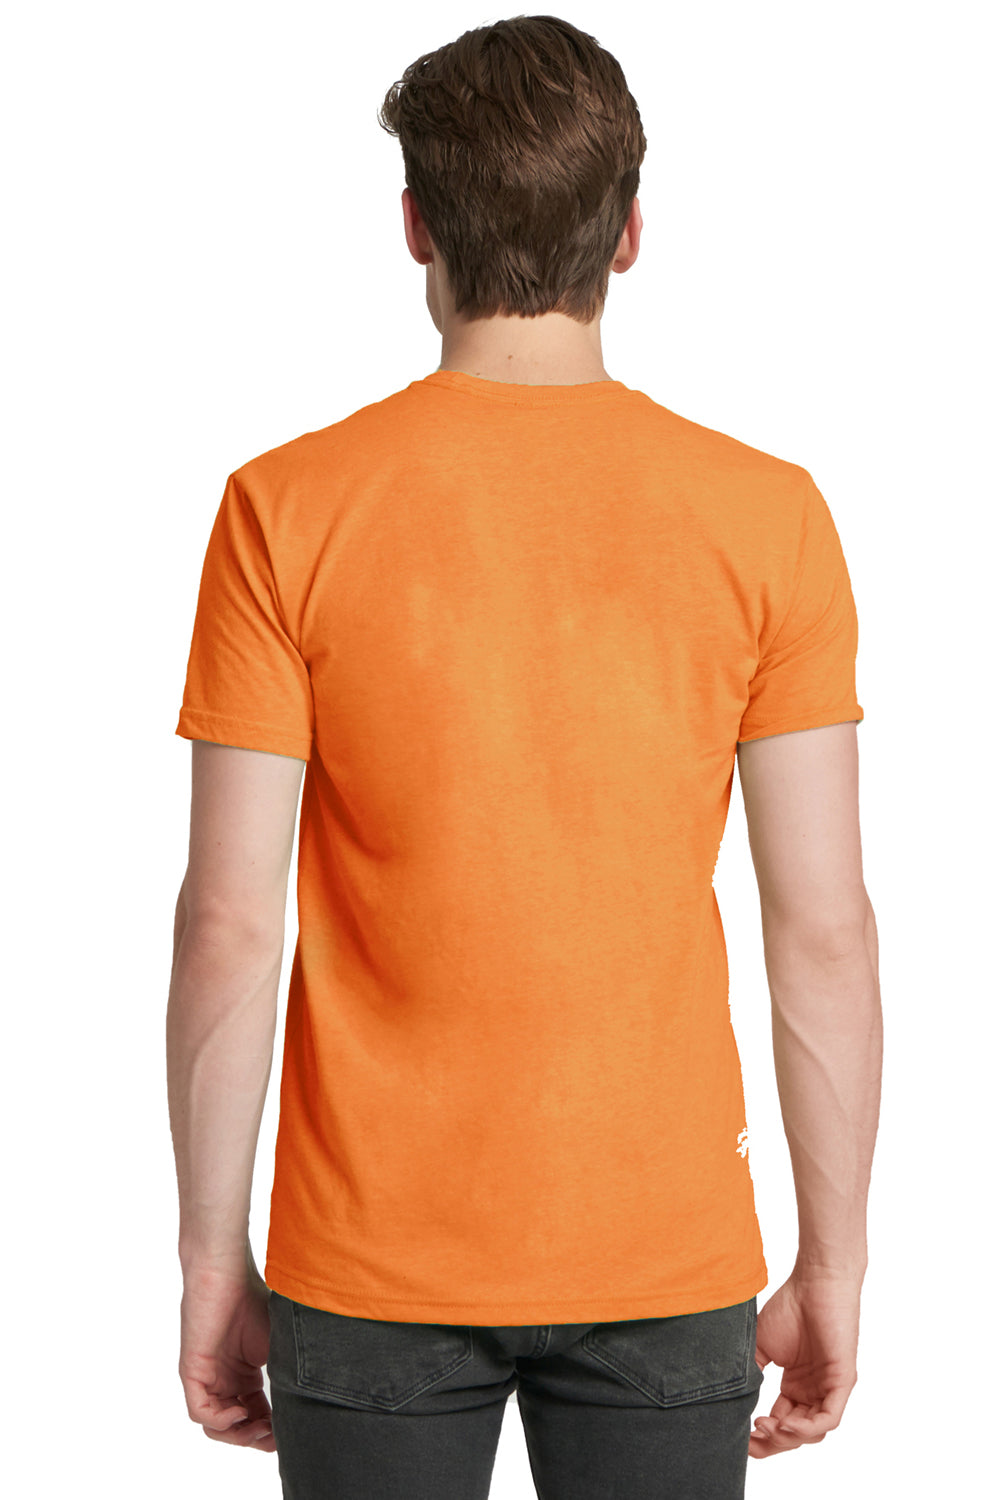 Next Level N6210 Mens CVC Jersey Short Sleeve Crewneck T-Shirt Orange Back